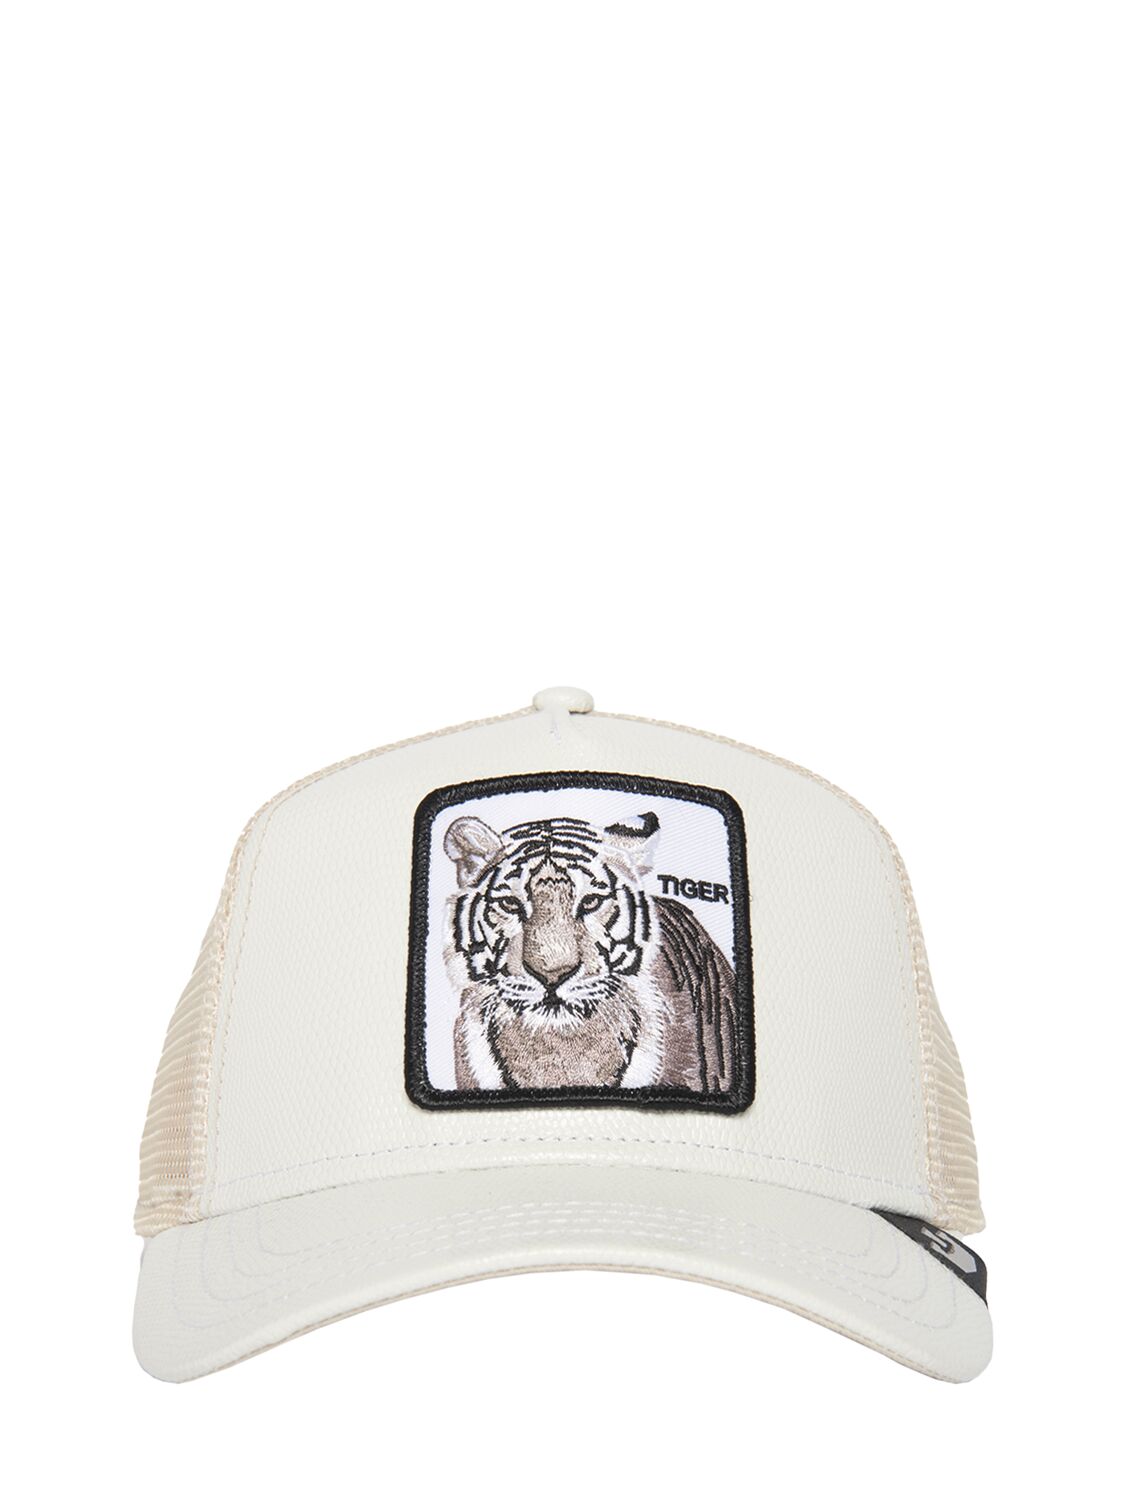 Goorin Bros The Killer Tiger Trucker Hat In White